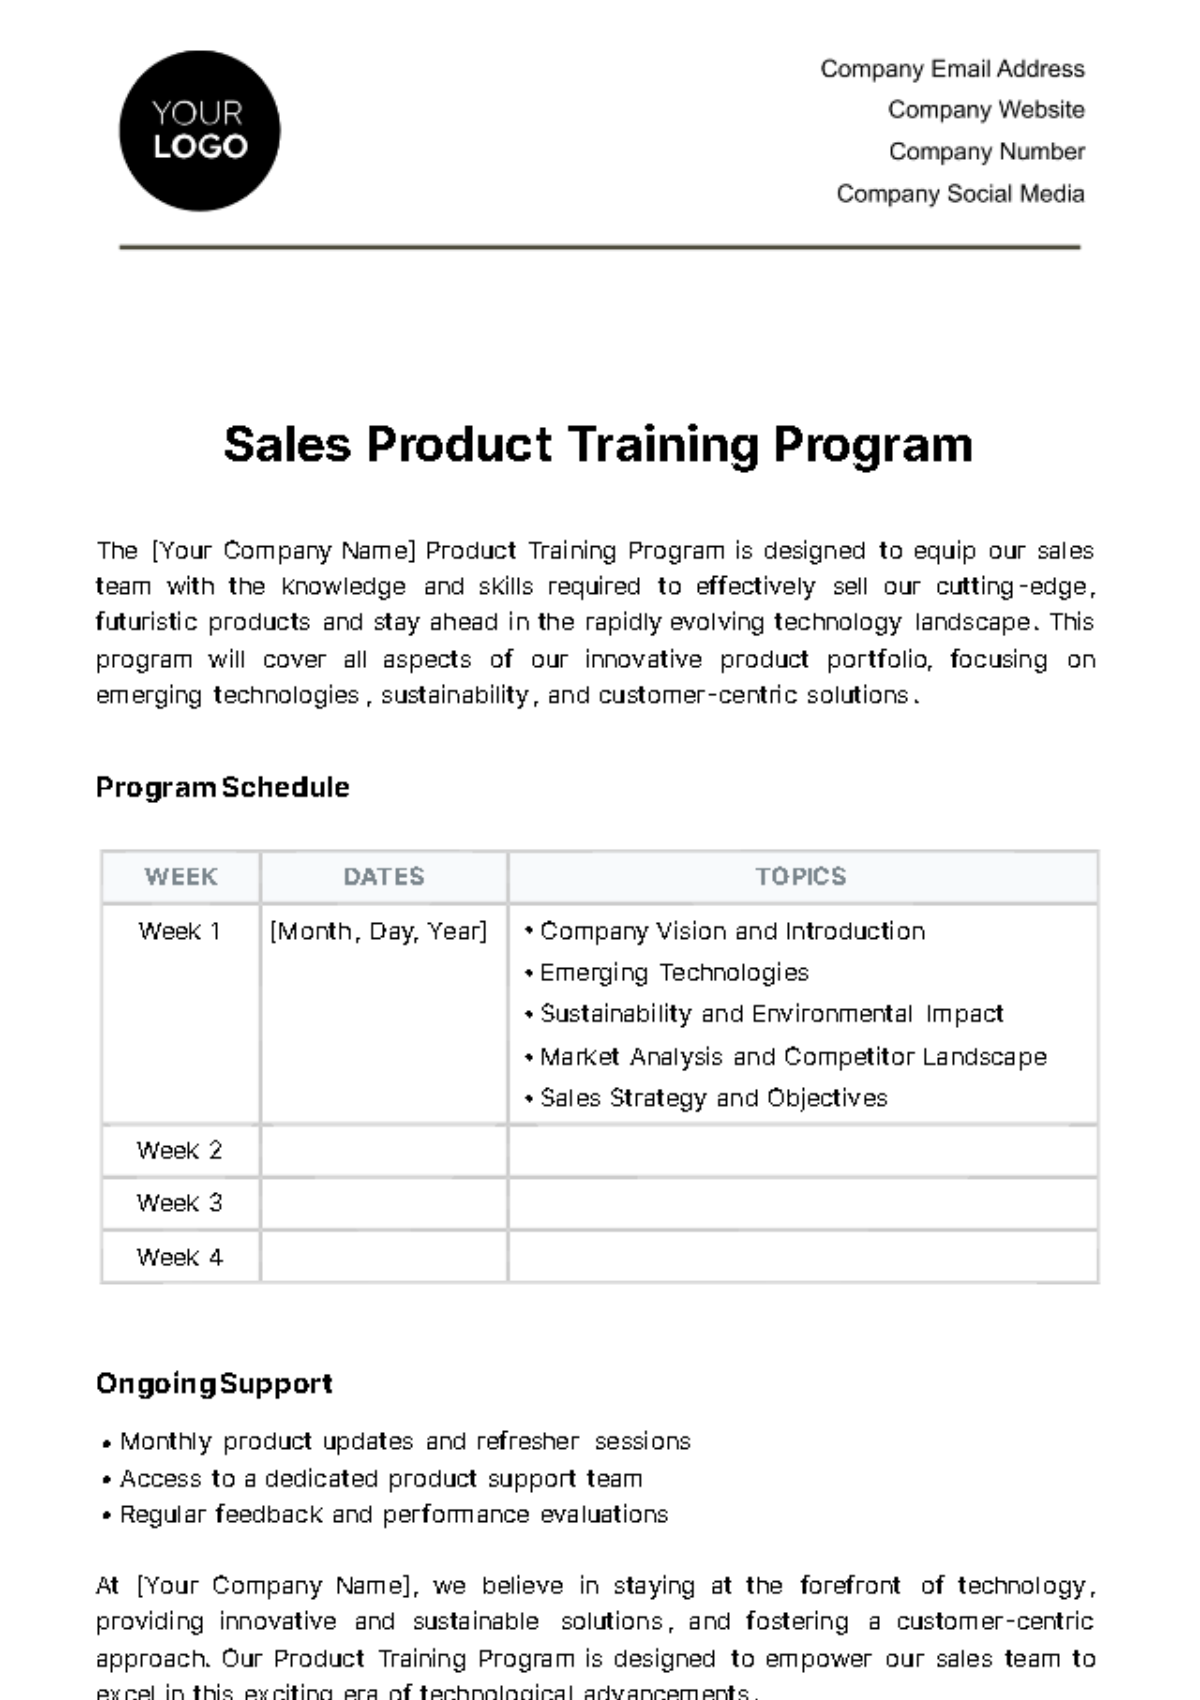 Free Sales Product Training Program Template